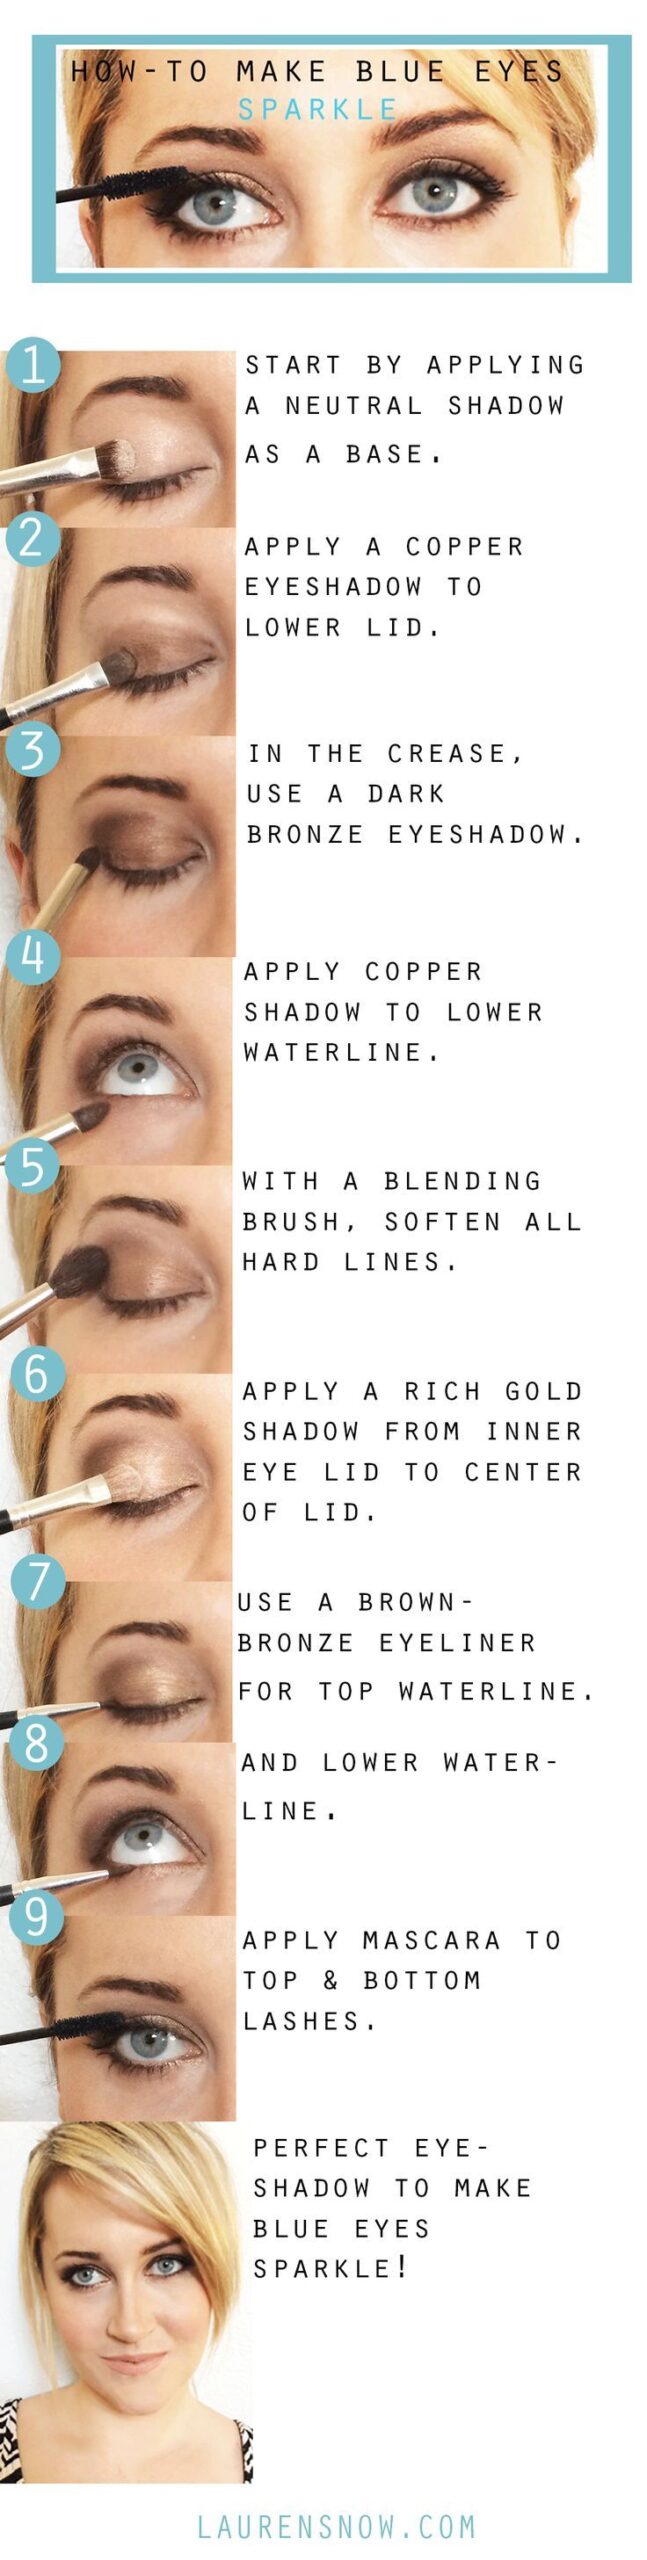 Makeup Tutorials For Blue Eyes | Makeup Tutorials